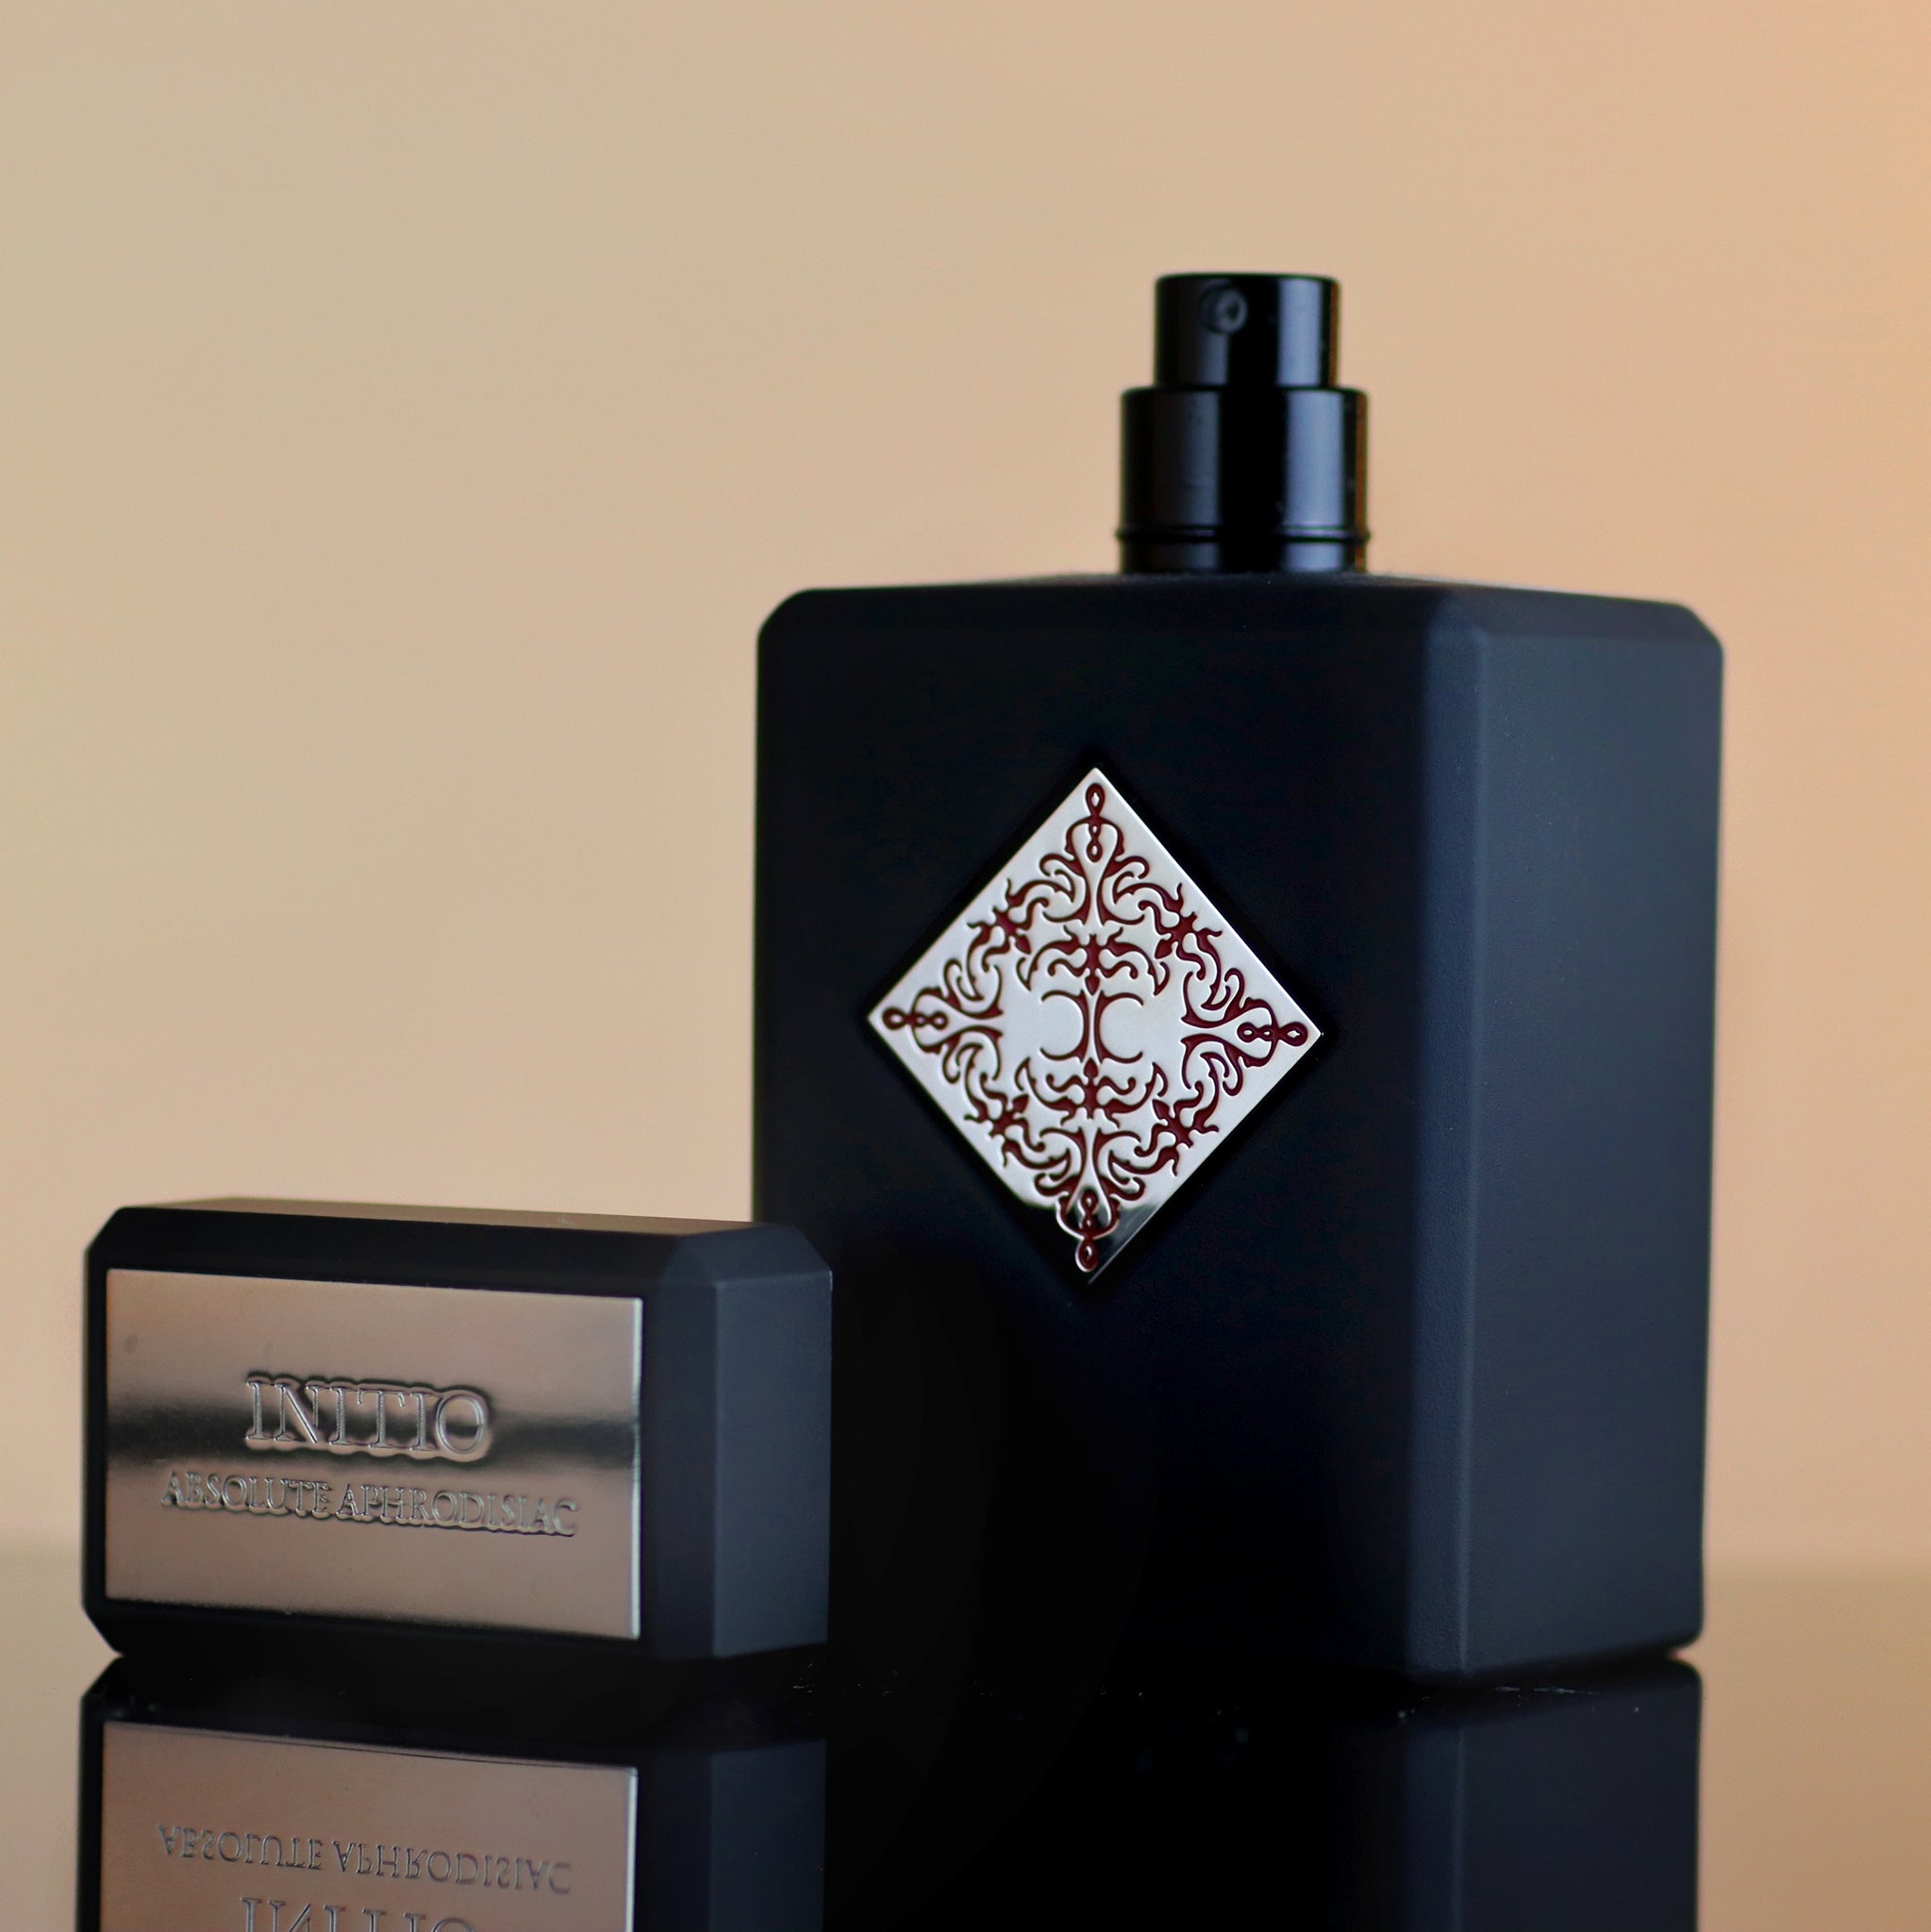 Initio Absolute Aphrodisiac, Fragrance Sample